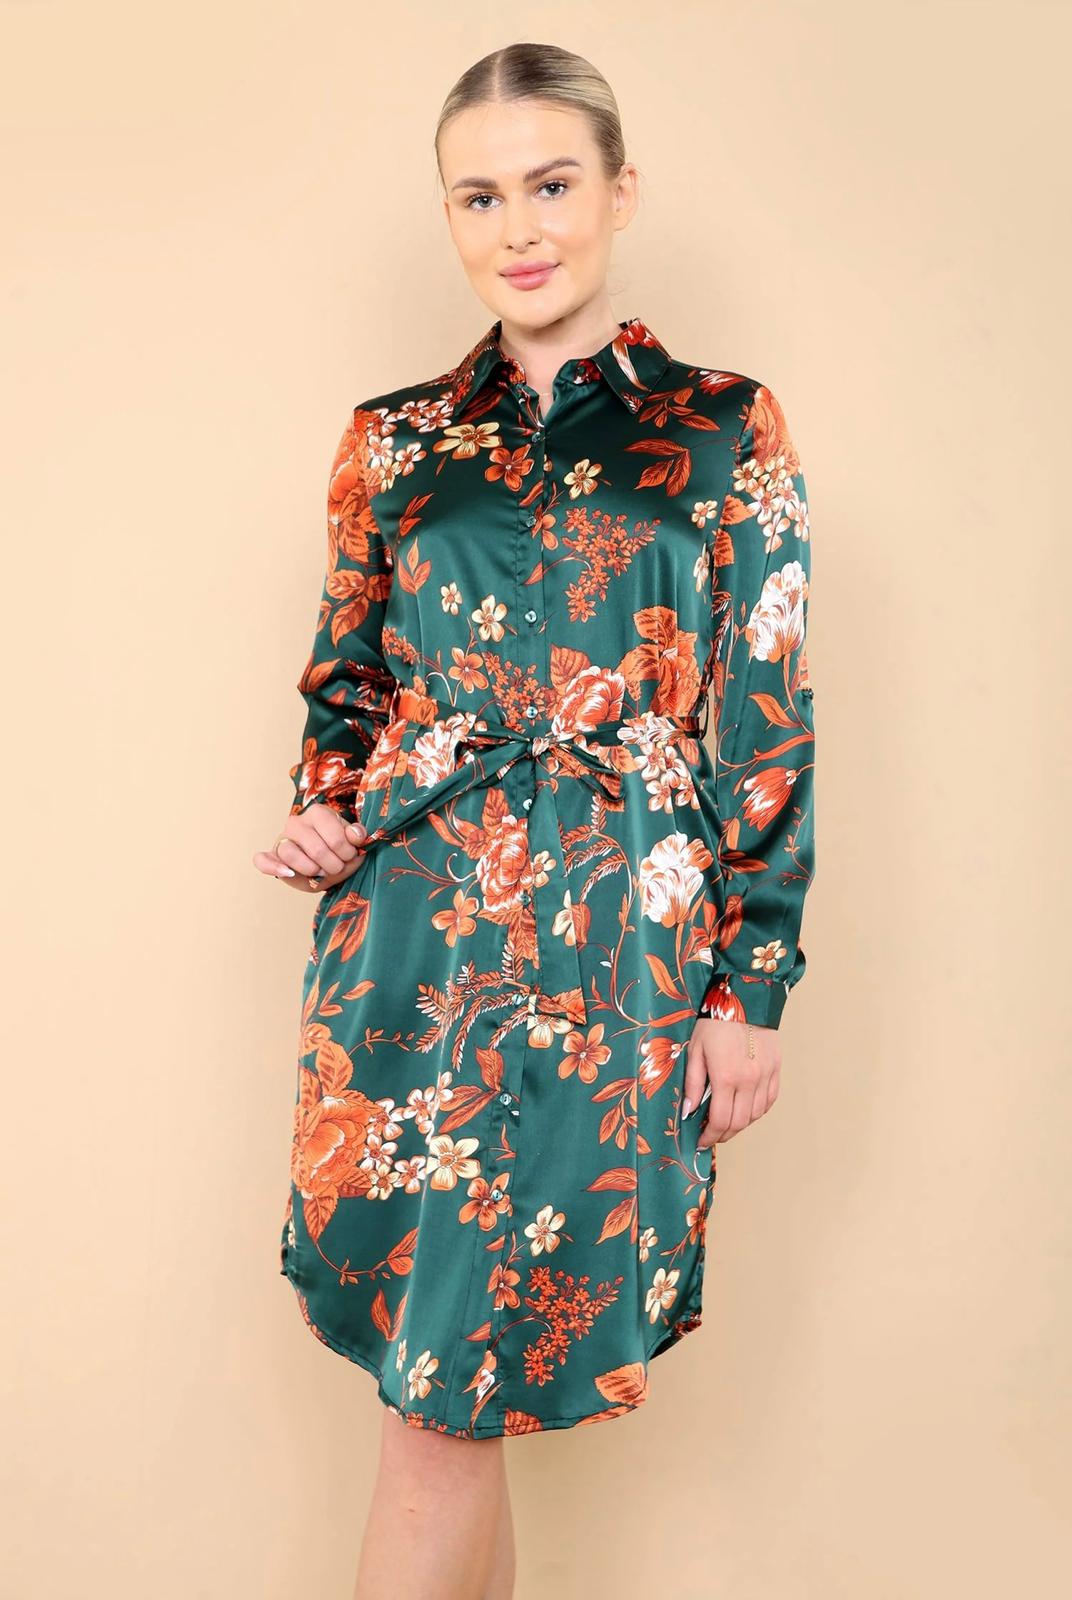 Satin shirt dress Autumn floral print princess boutique